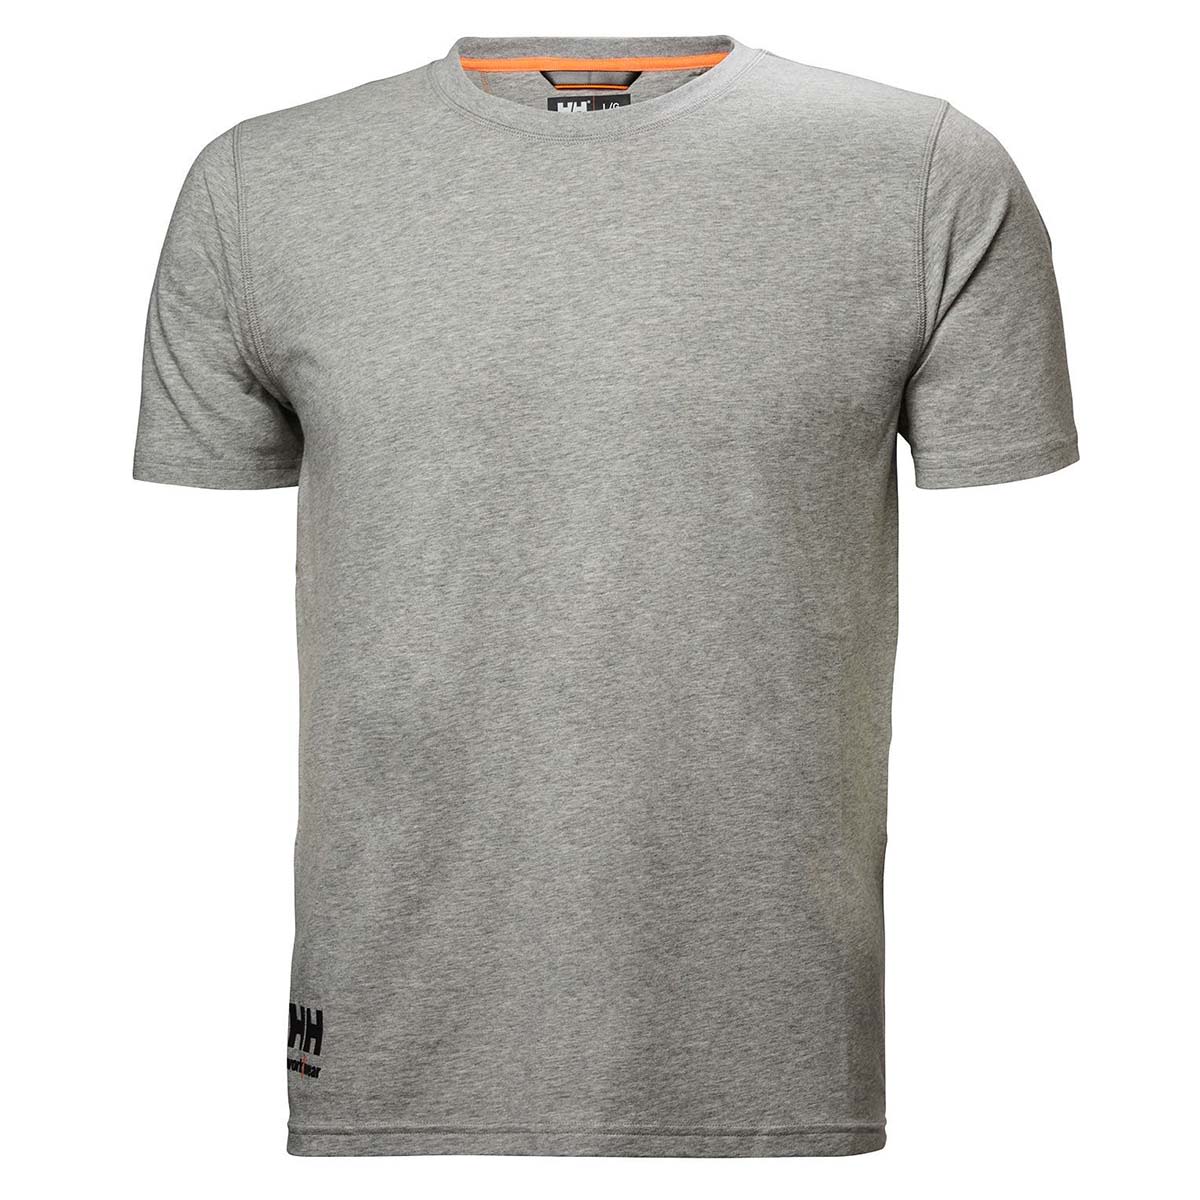 Helly Hansen Grey Cotton Short Sleeve T-Shirt, UK- M, EUR- M